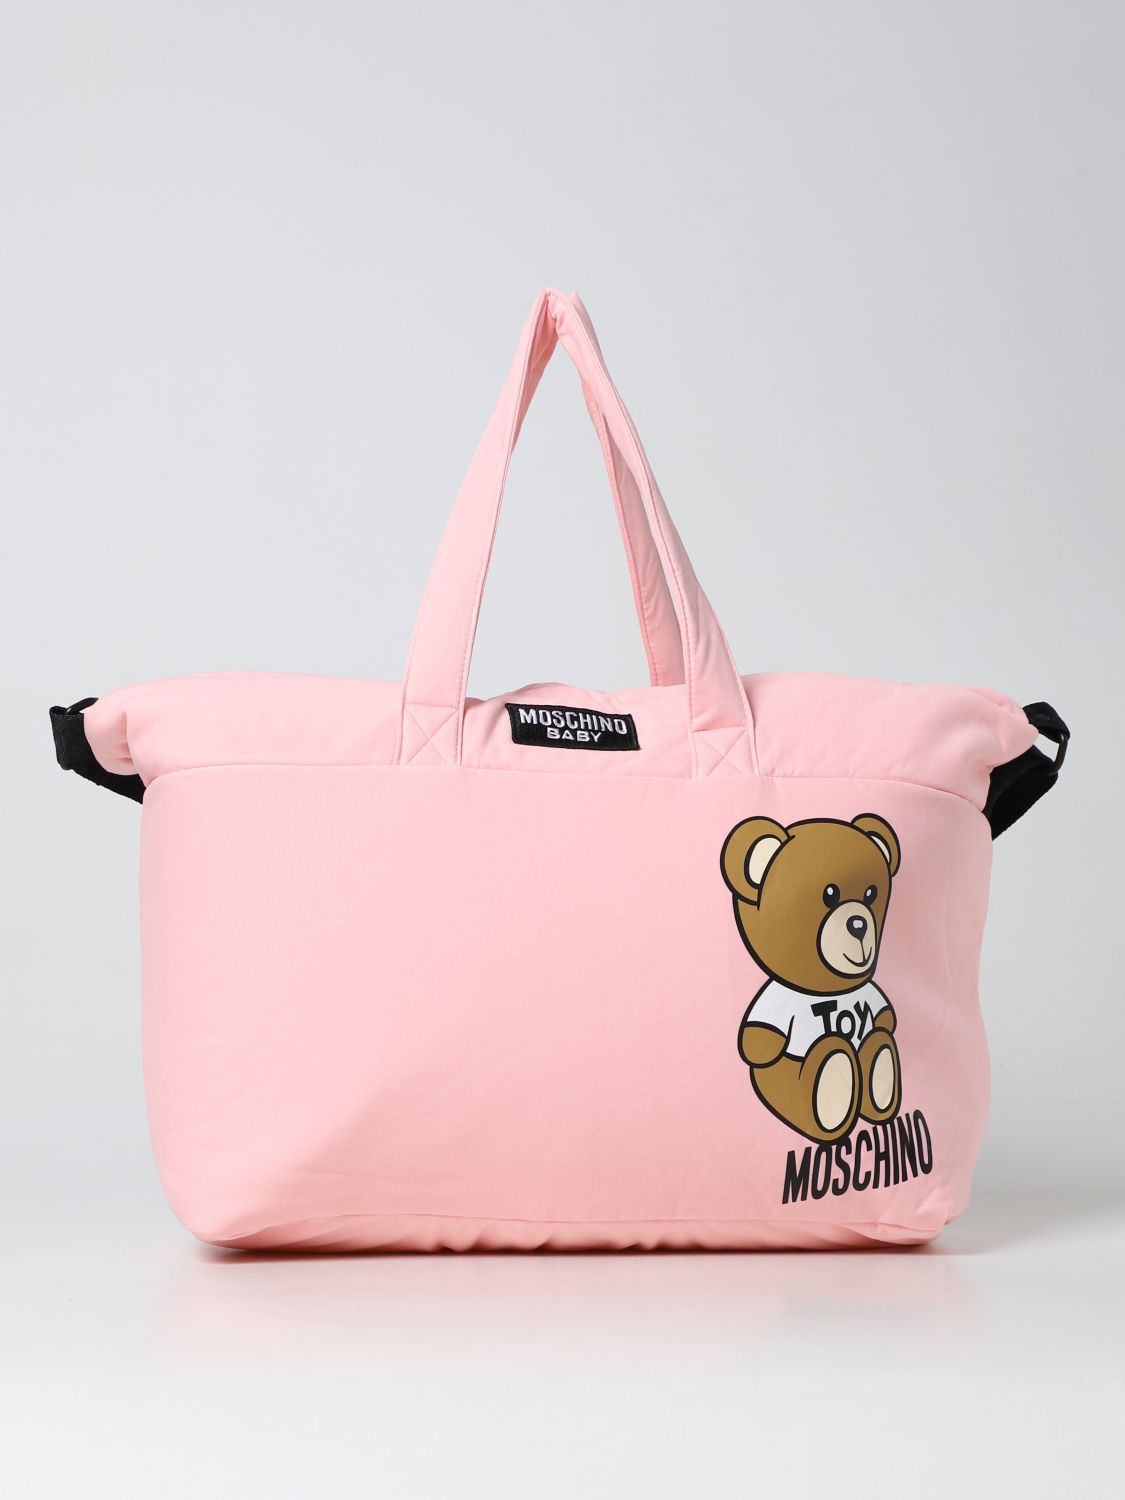 schoonmaken aanbidden Teleurstelling MOSCHINO BABY: bag for kids - Pink | Moschino Baby bag MRX03ALDA25 online  on GIGLIO.COM